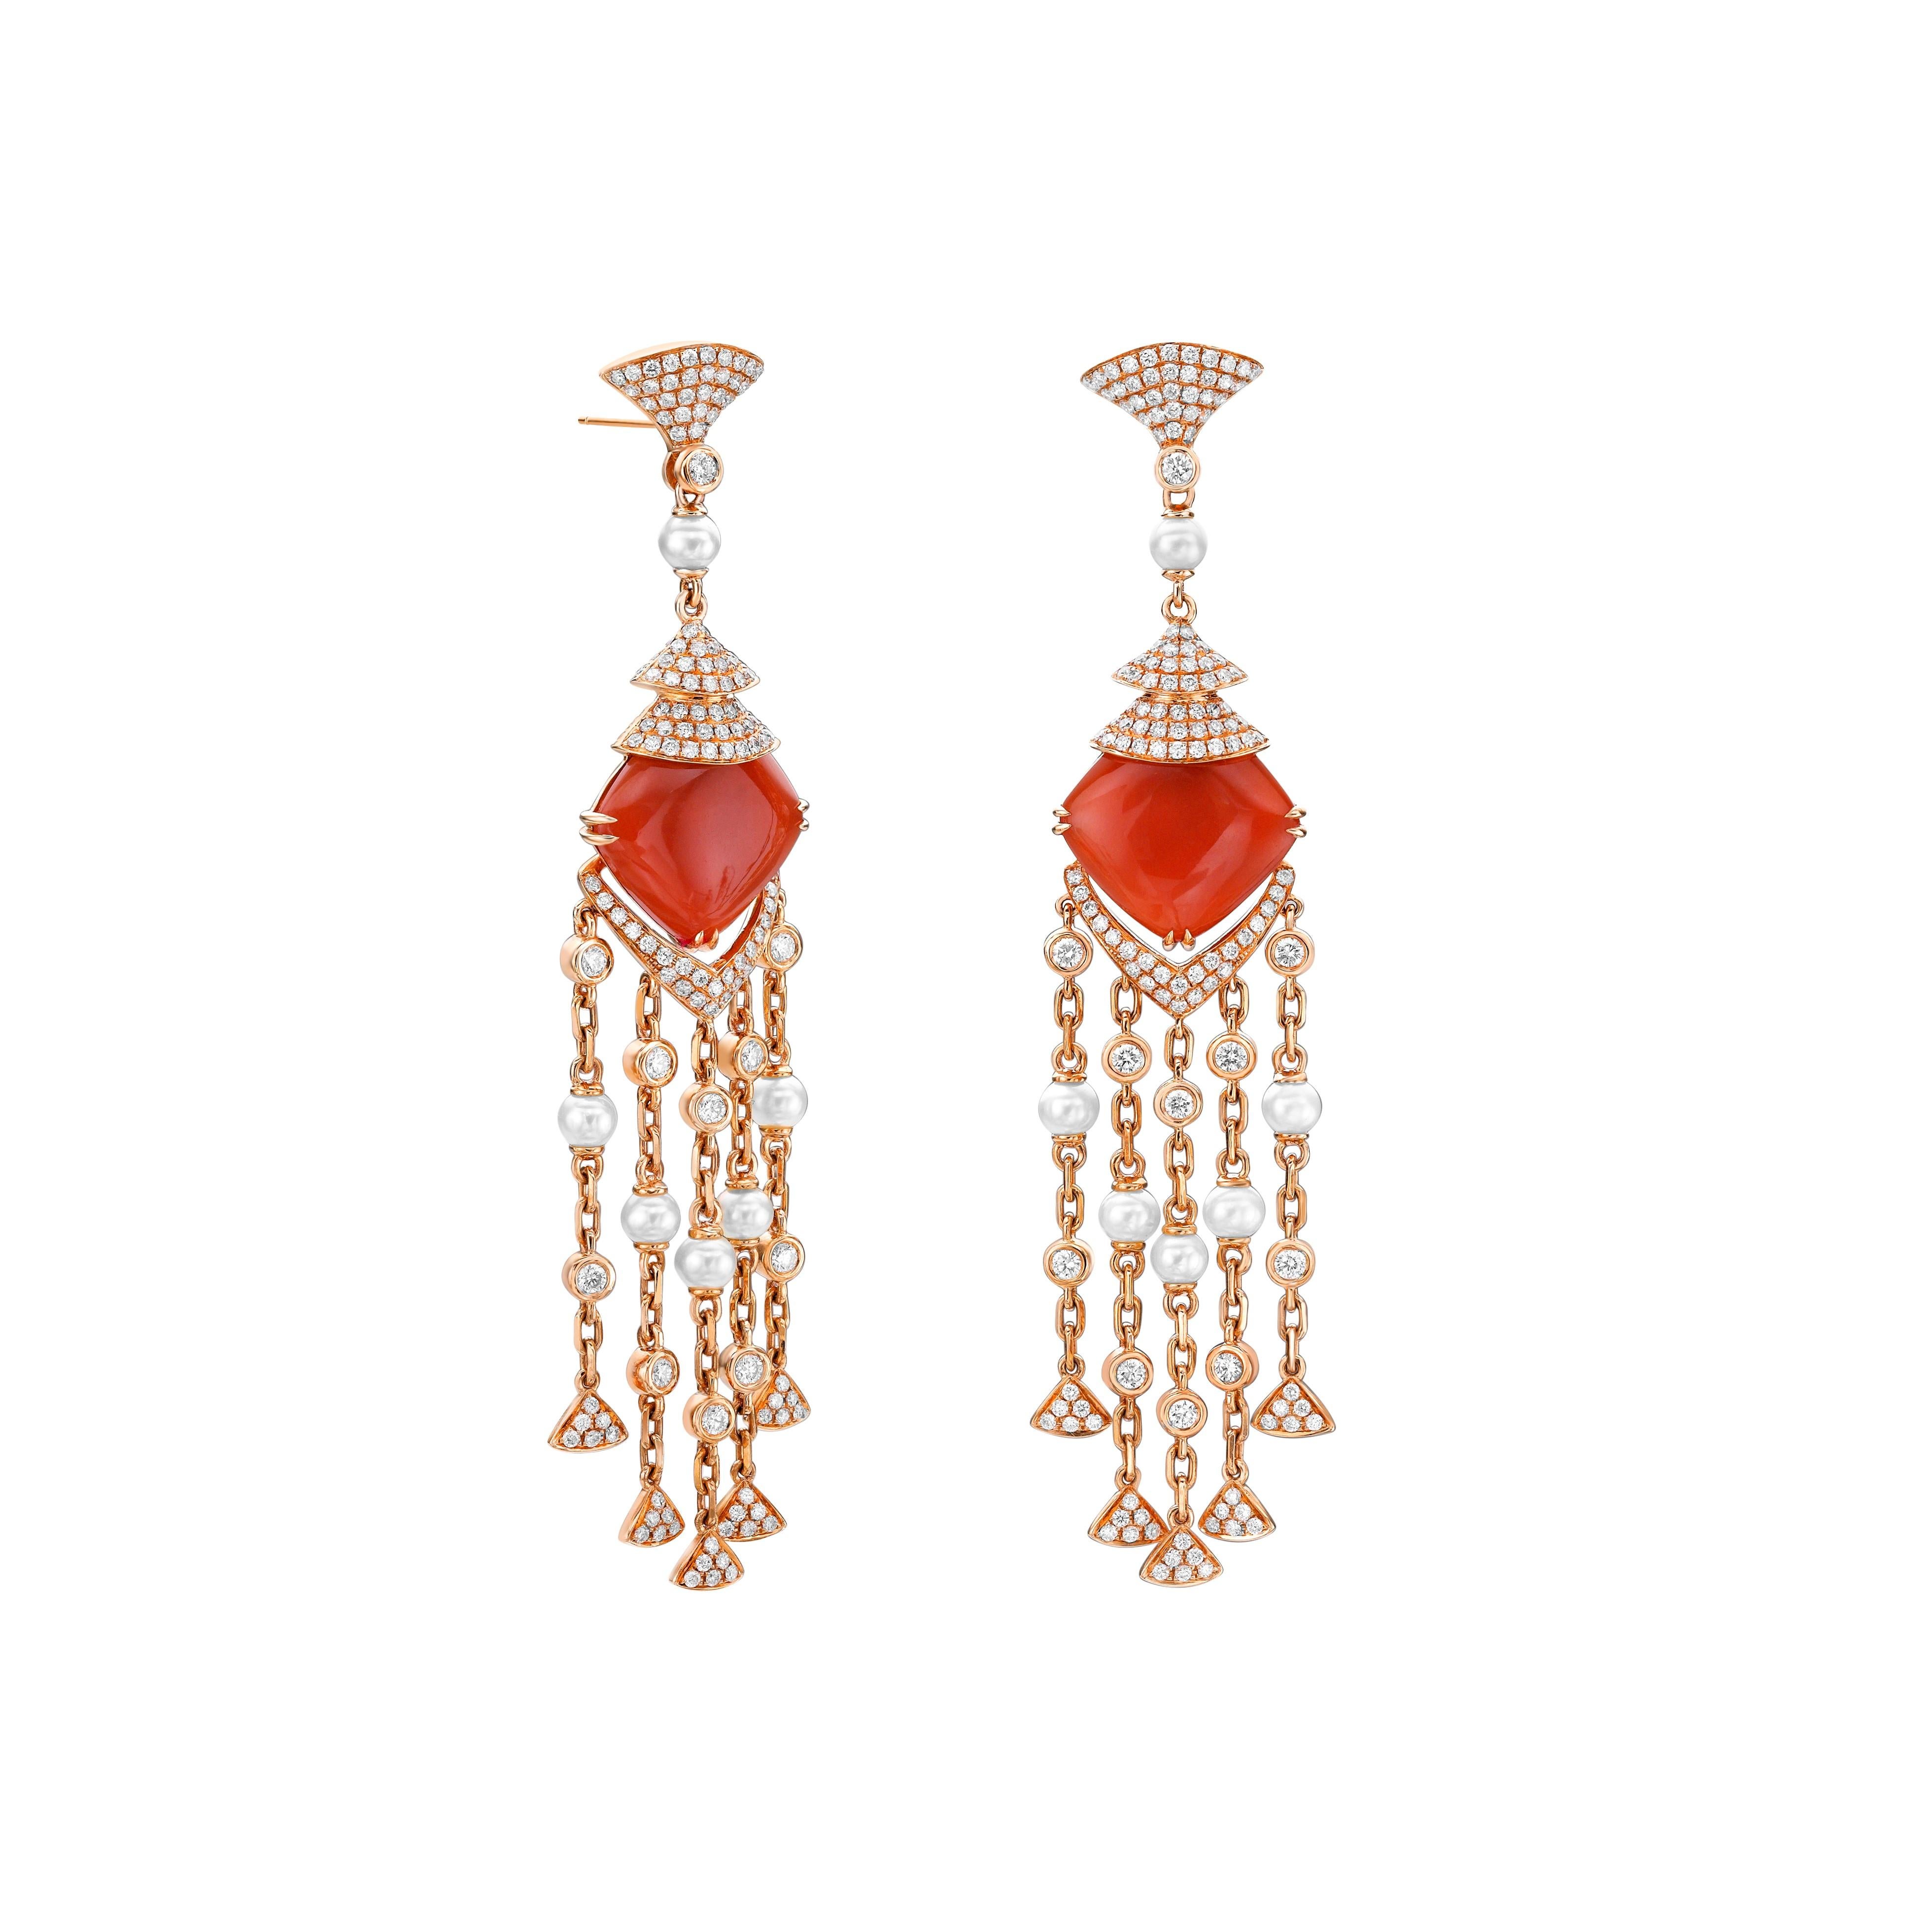 Women's 17.6 Carat Moonstone Earrings in 18 Karat Gold with Diamond & Pearls For Sale